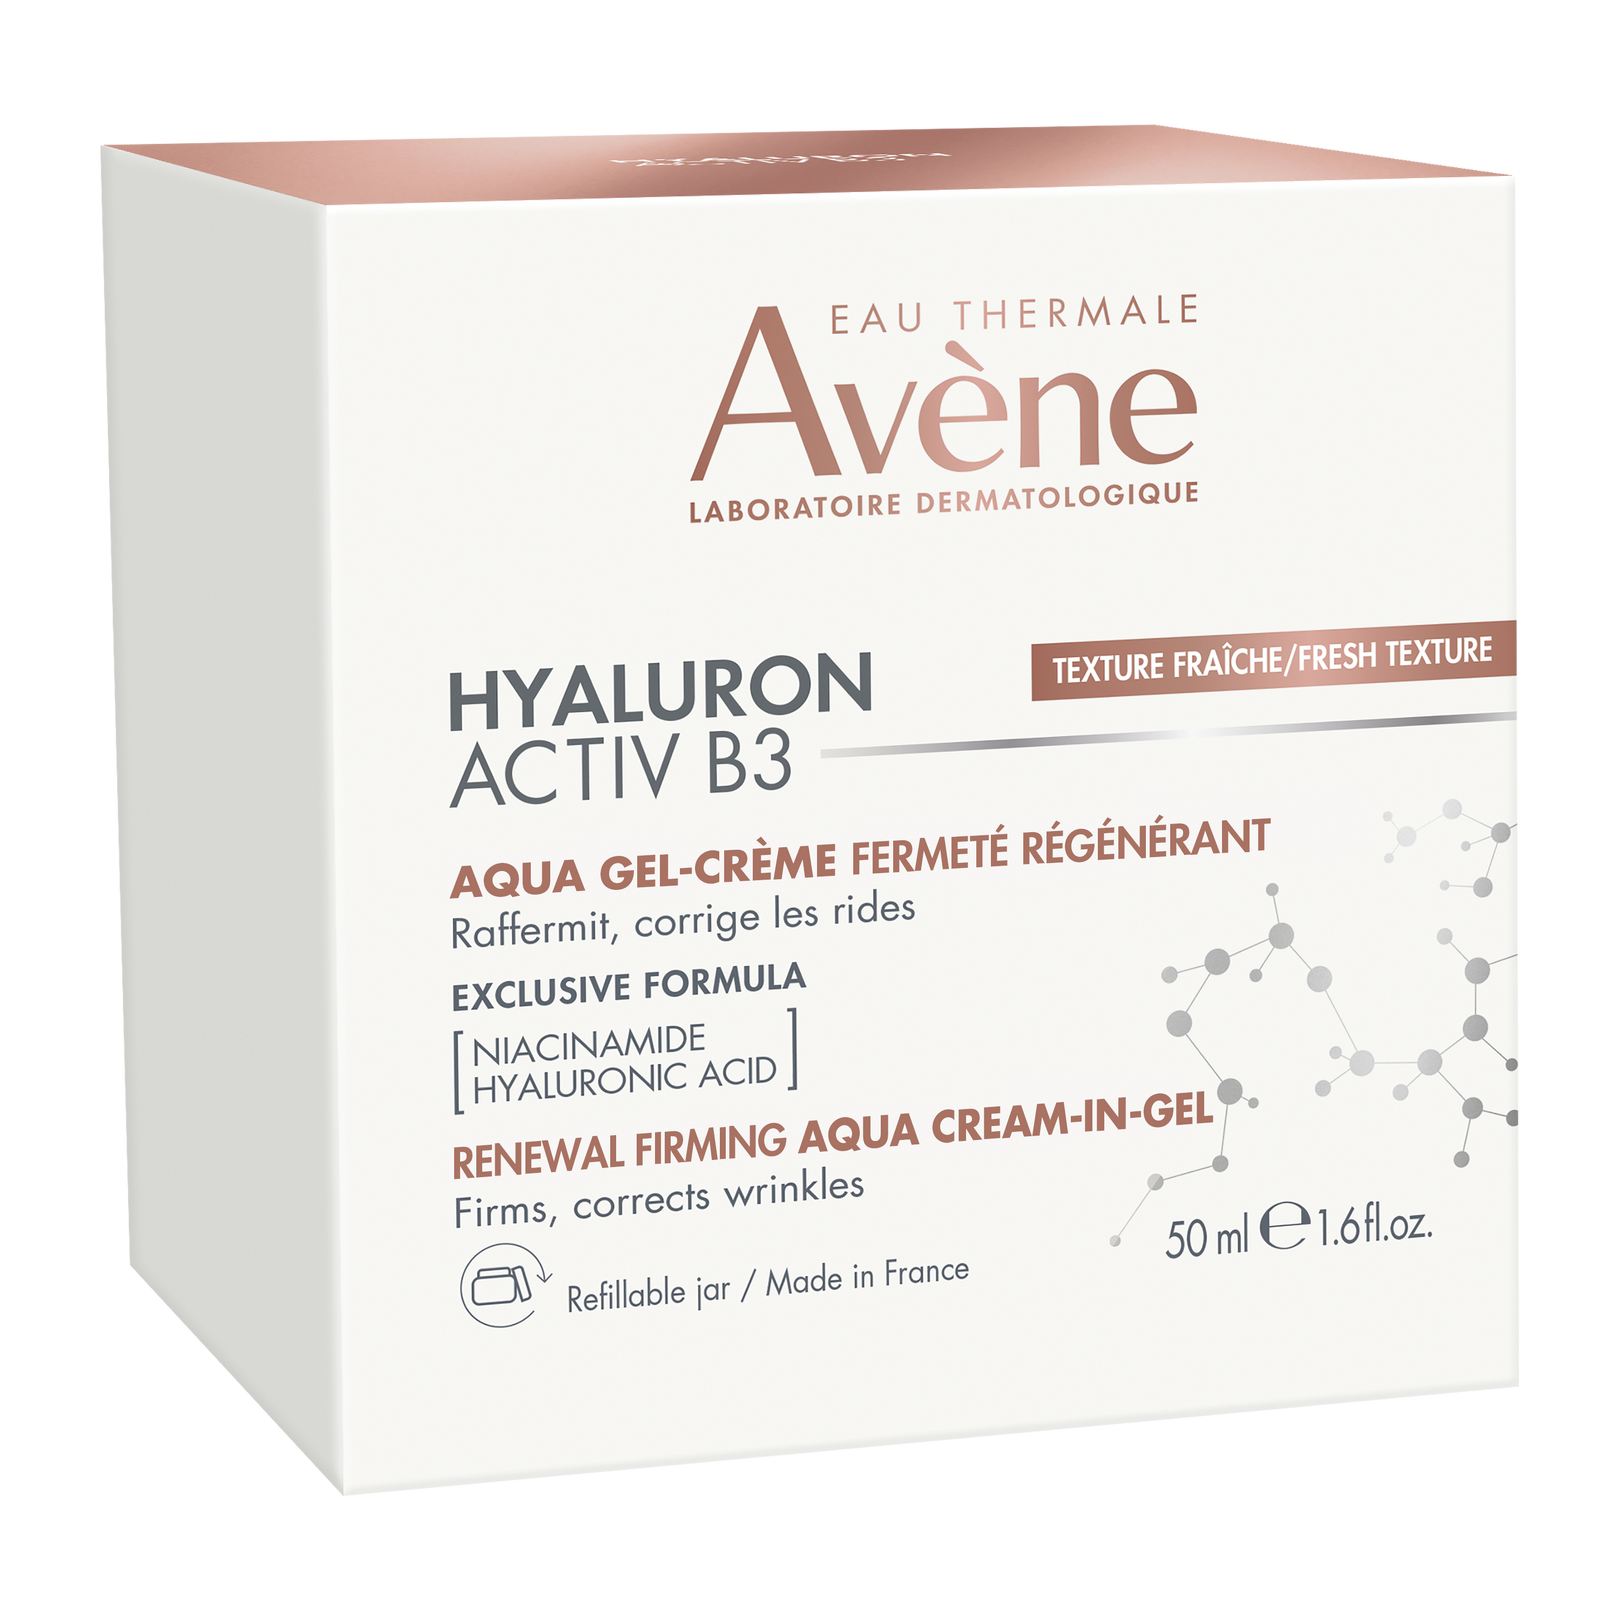 Hyaluron Activ B3 Renewal firming aqua cream-in-gel